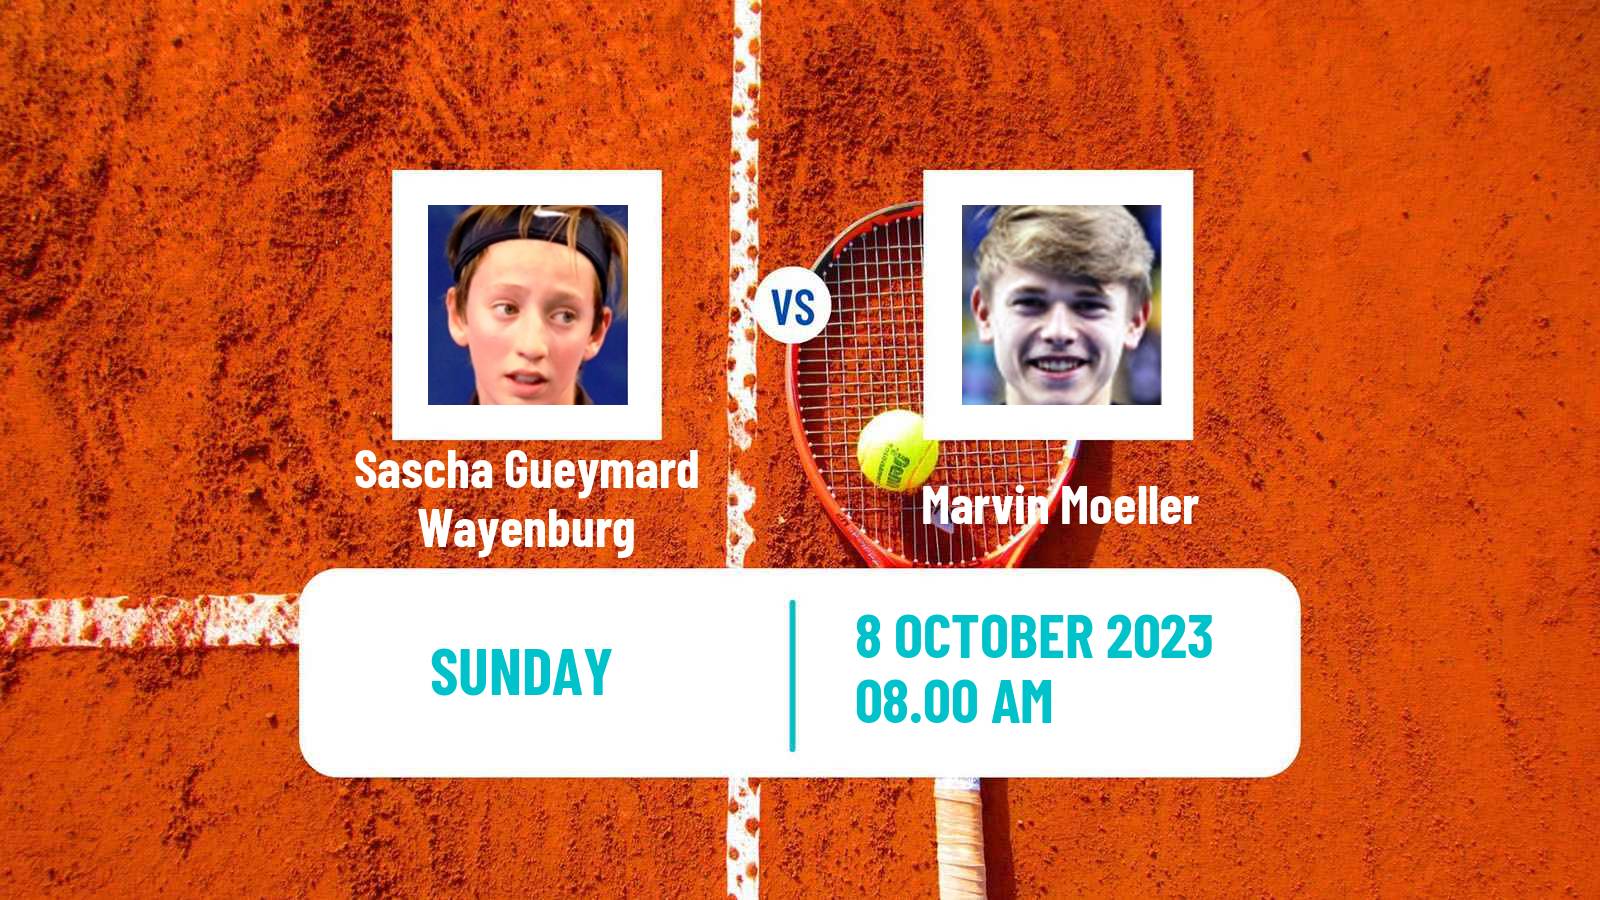 Tennis ITF M25 Nevers Men Sascha Gueymard Wayenburg - Marvin Moeller